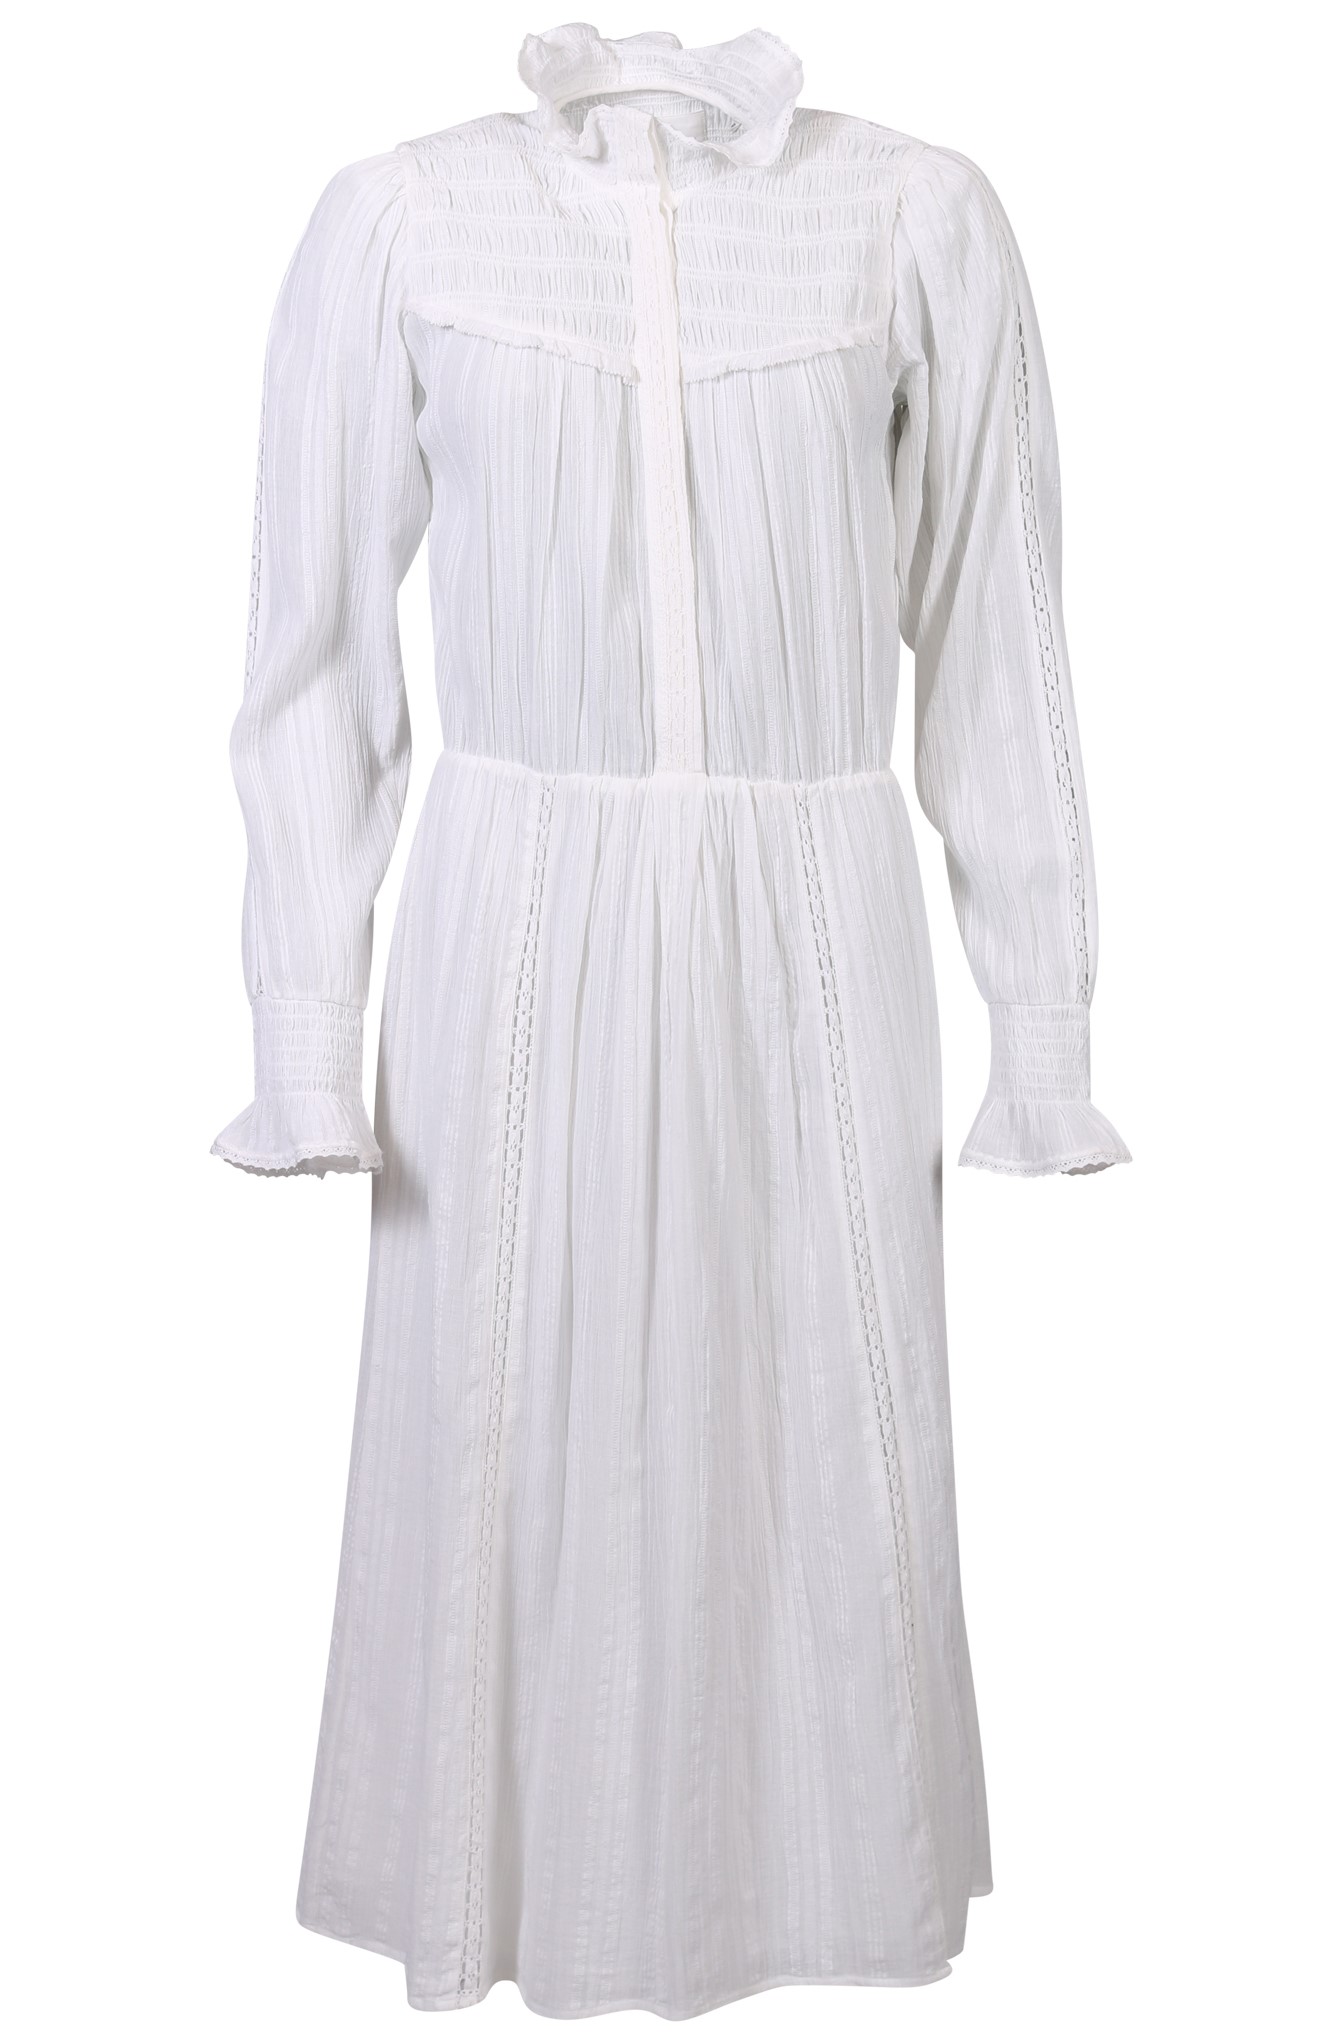 ISABEL MARANT ÉTOILE Imany Dress in White